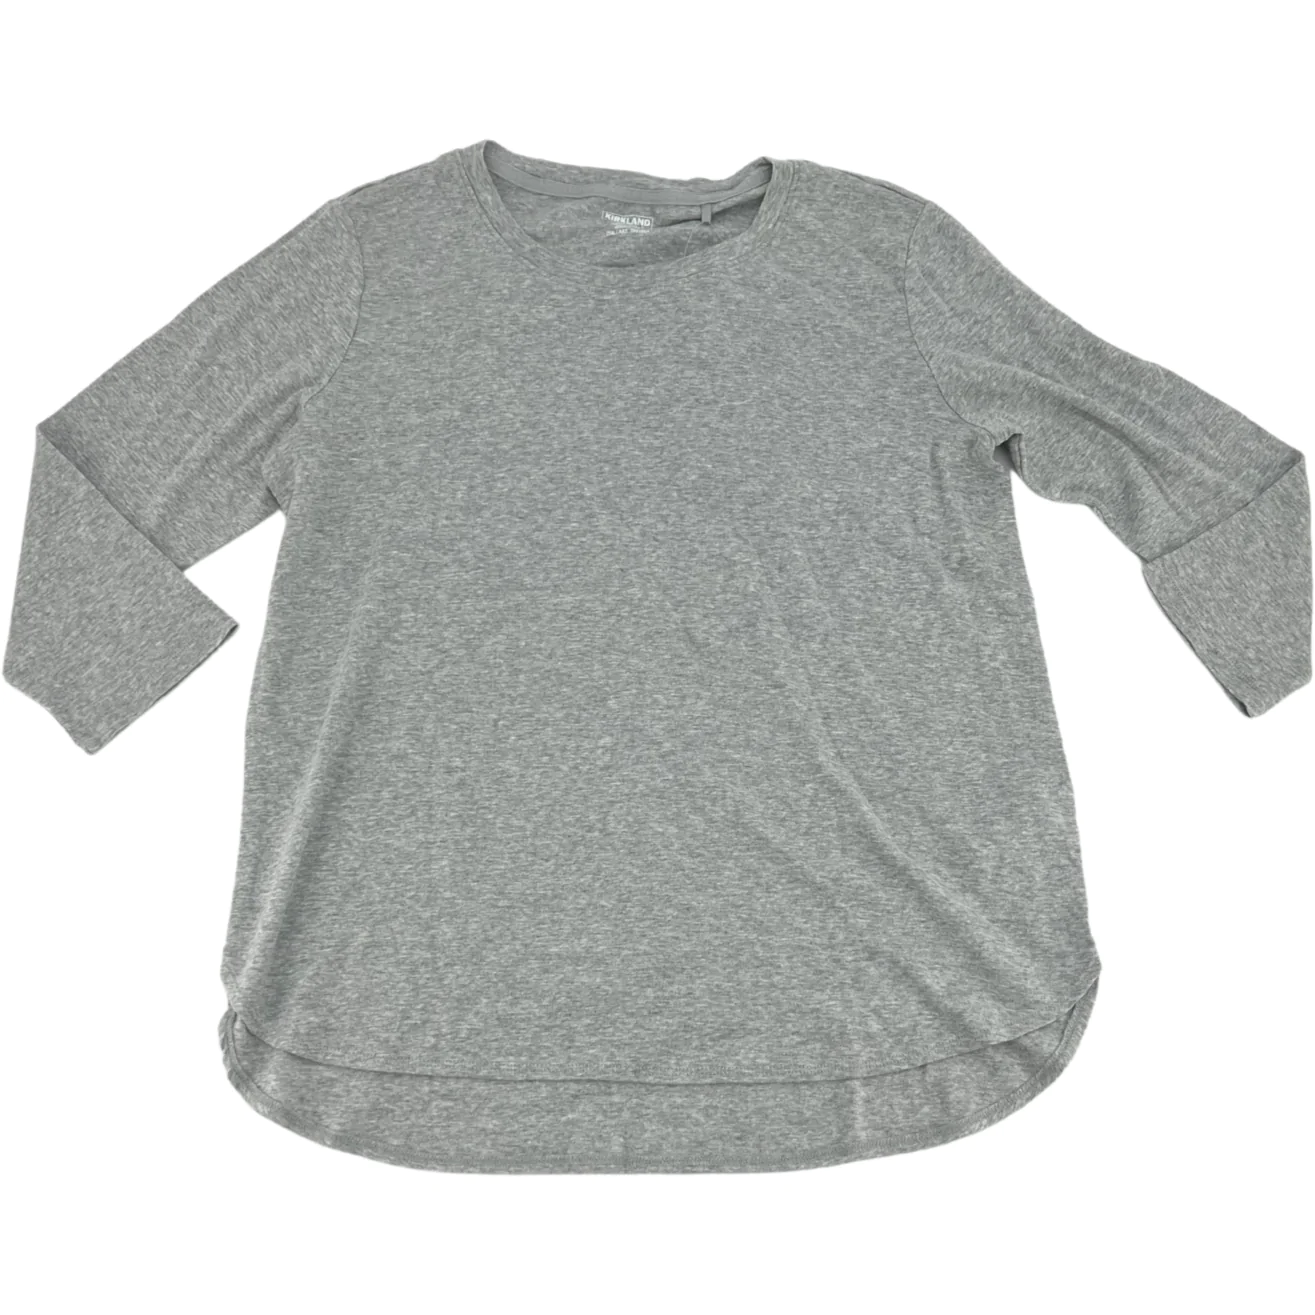 Kirkland Women's Cotton Slub Tee / 3/4 Length Sleeves / Grey / Size Large